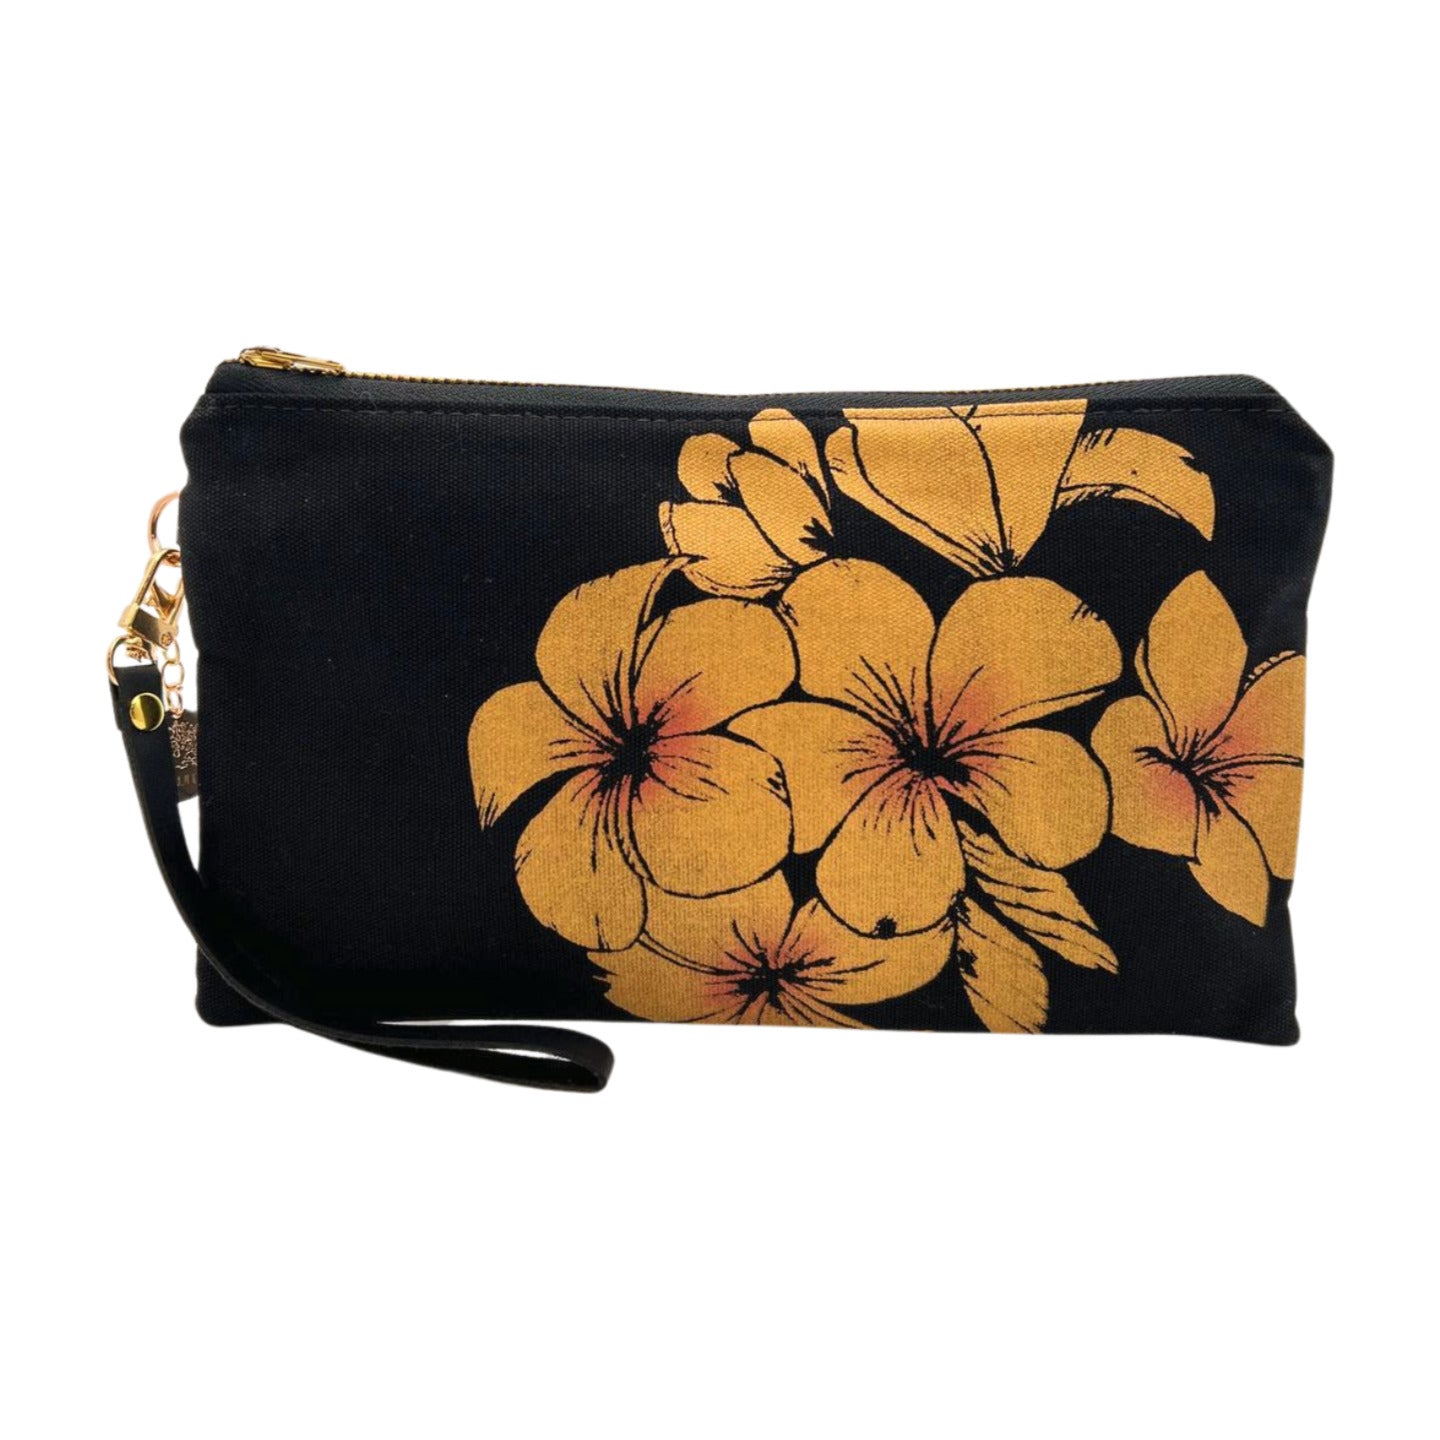 Pop-Up Mākeke - A Maui Day Original Handbags - Handprinted Small Handbag - Plumeria on Black Canvas - Front View